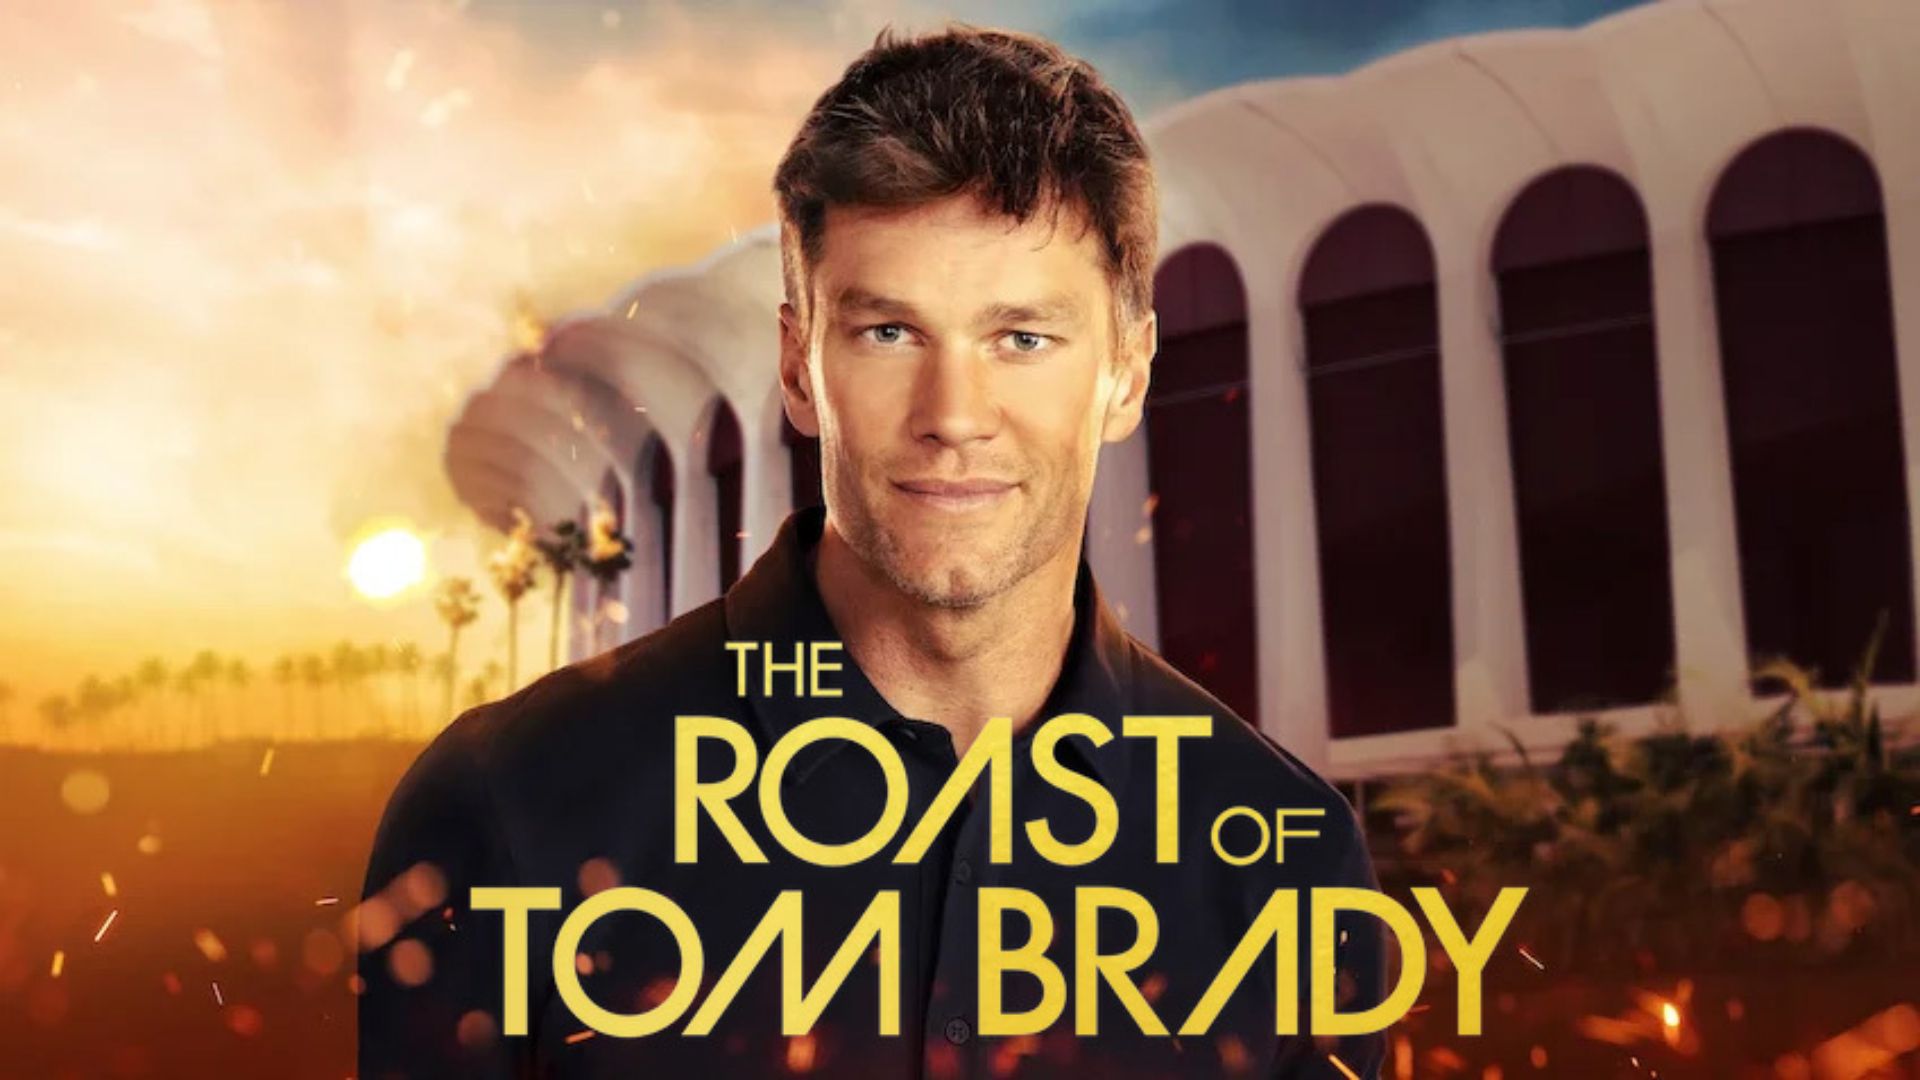 The Roast of Tom Brady on Netflix